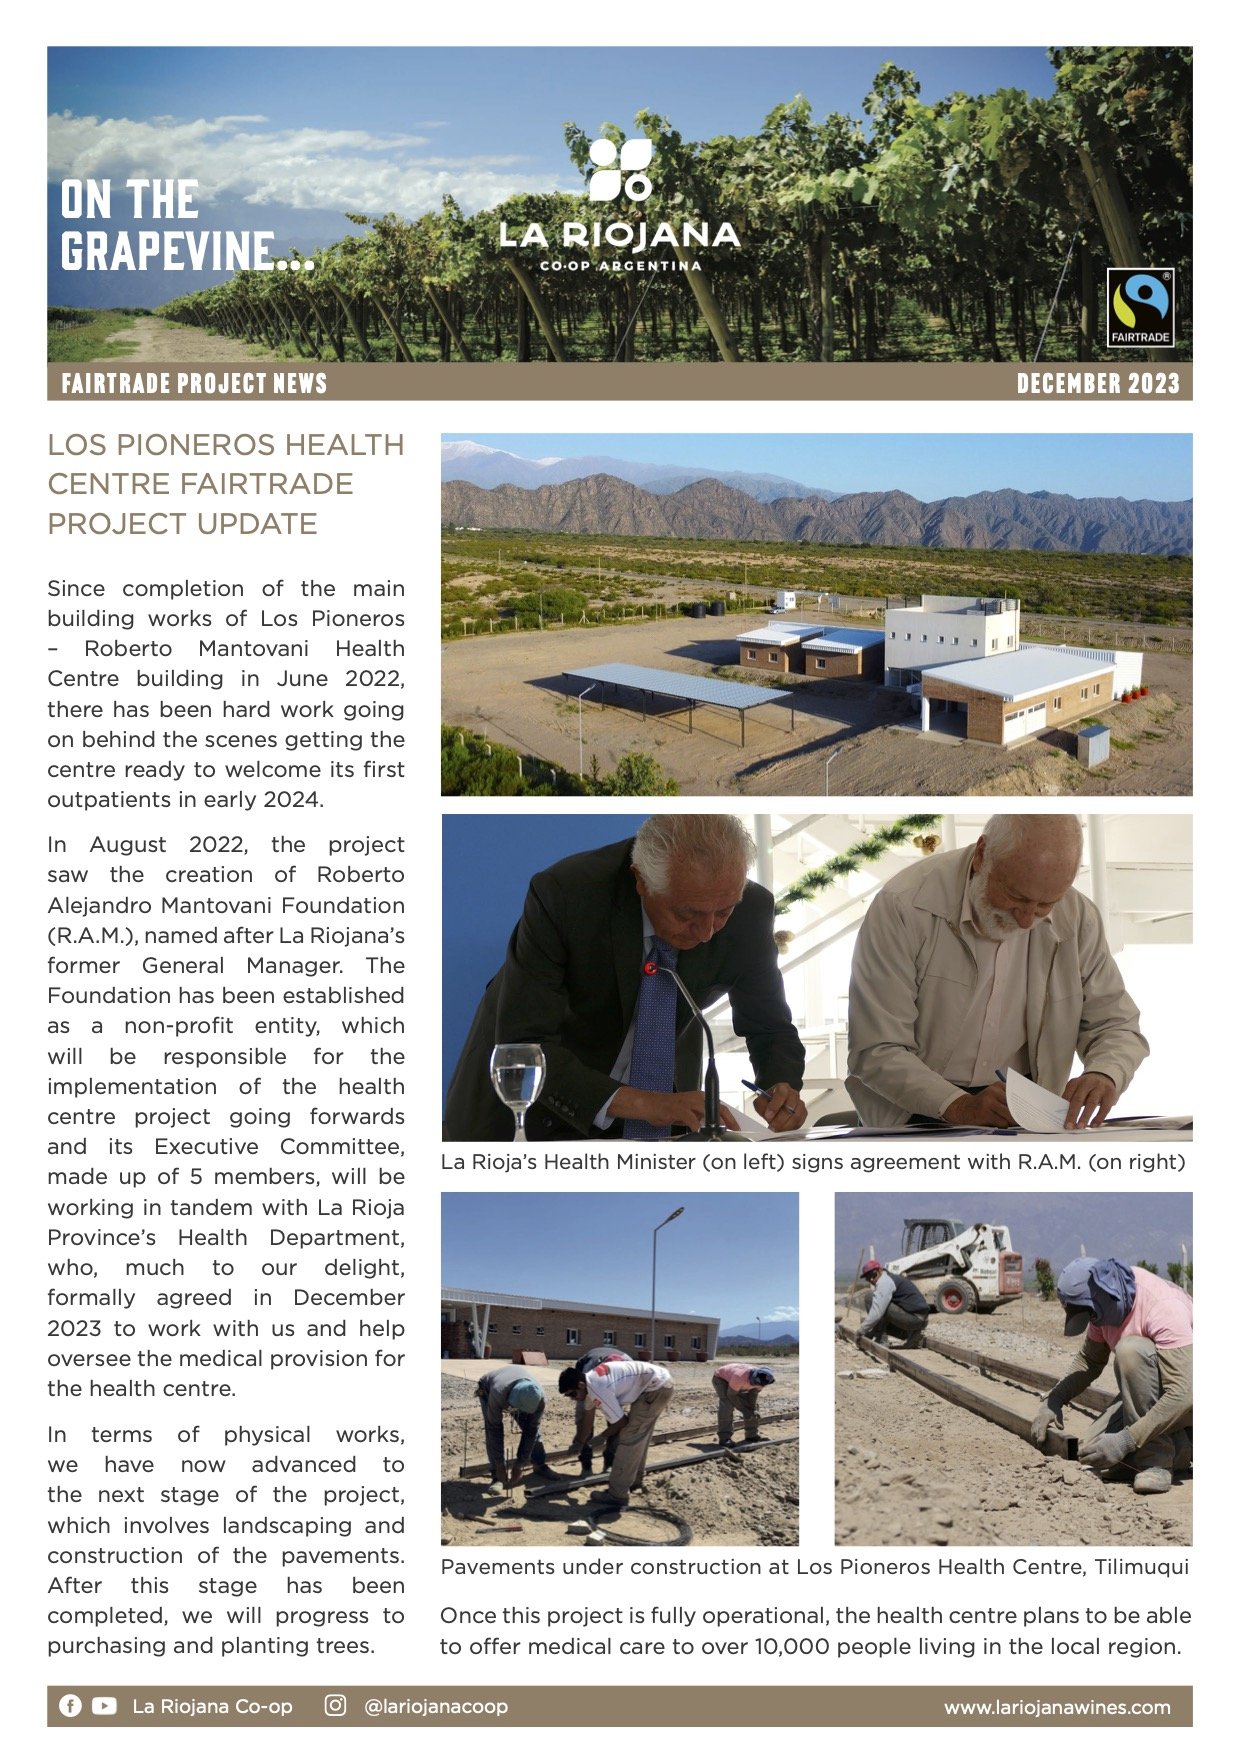 La Riojana  Co-op - December 2023 Newsletter - !0th edition - 1.jpg